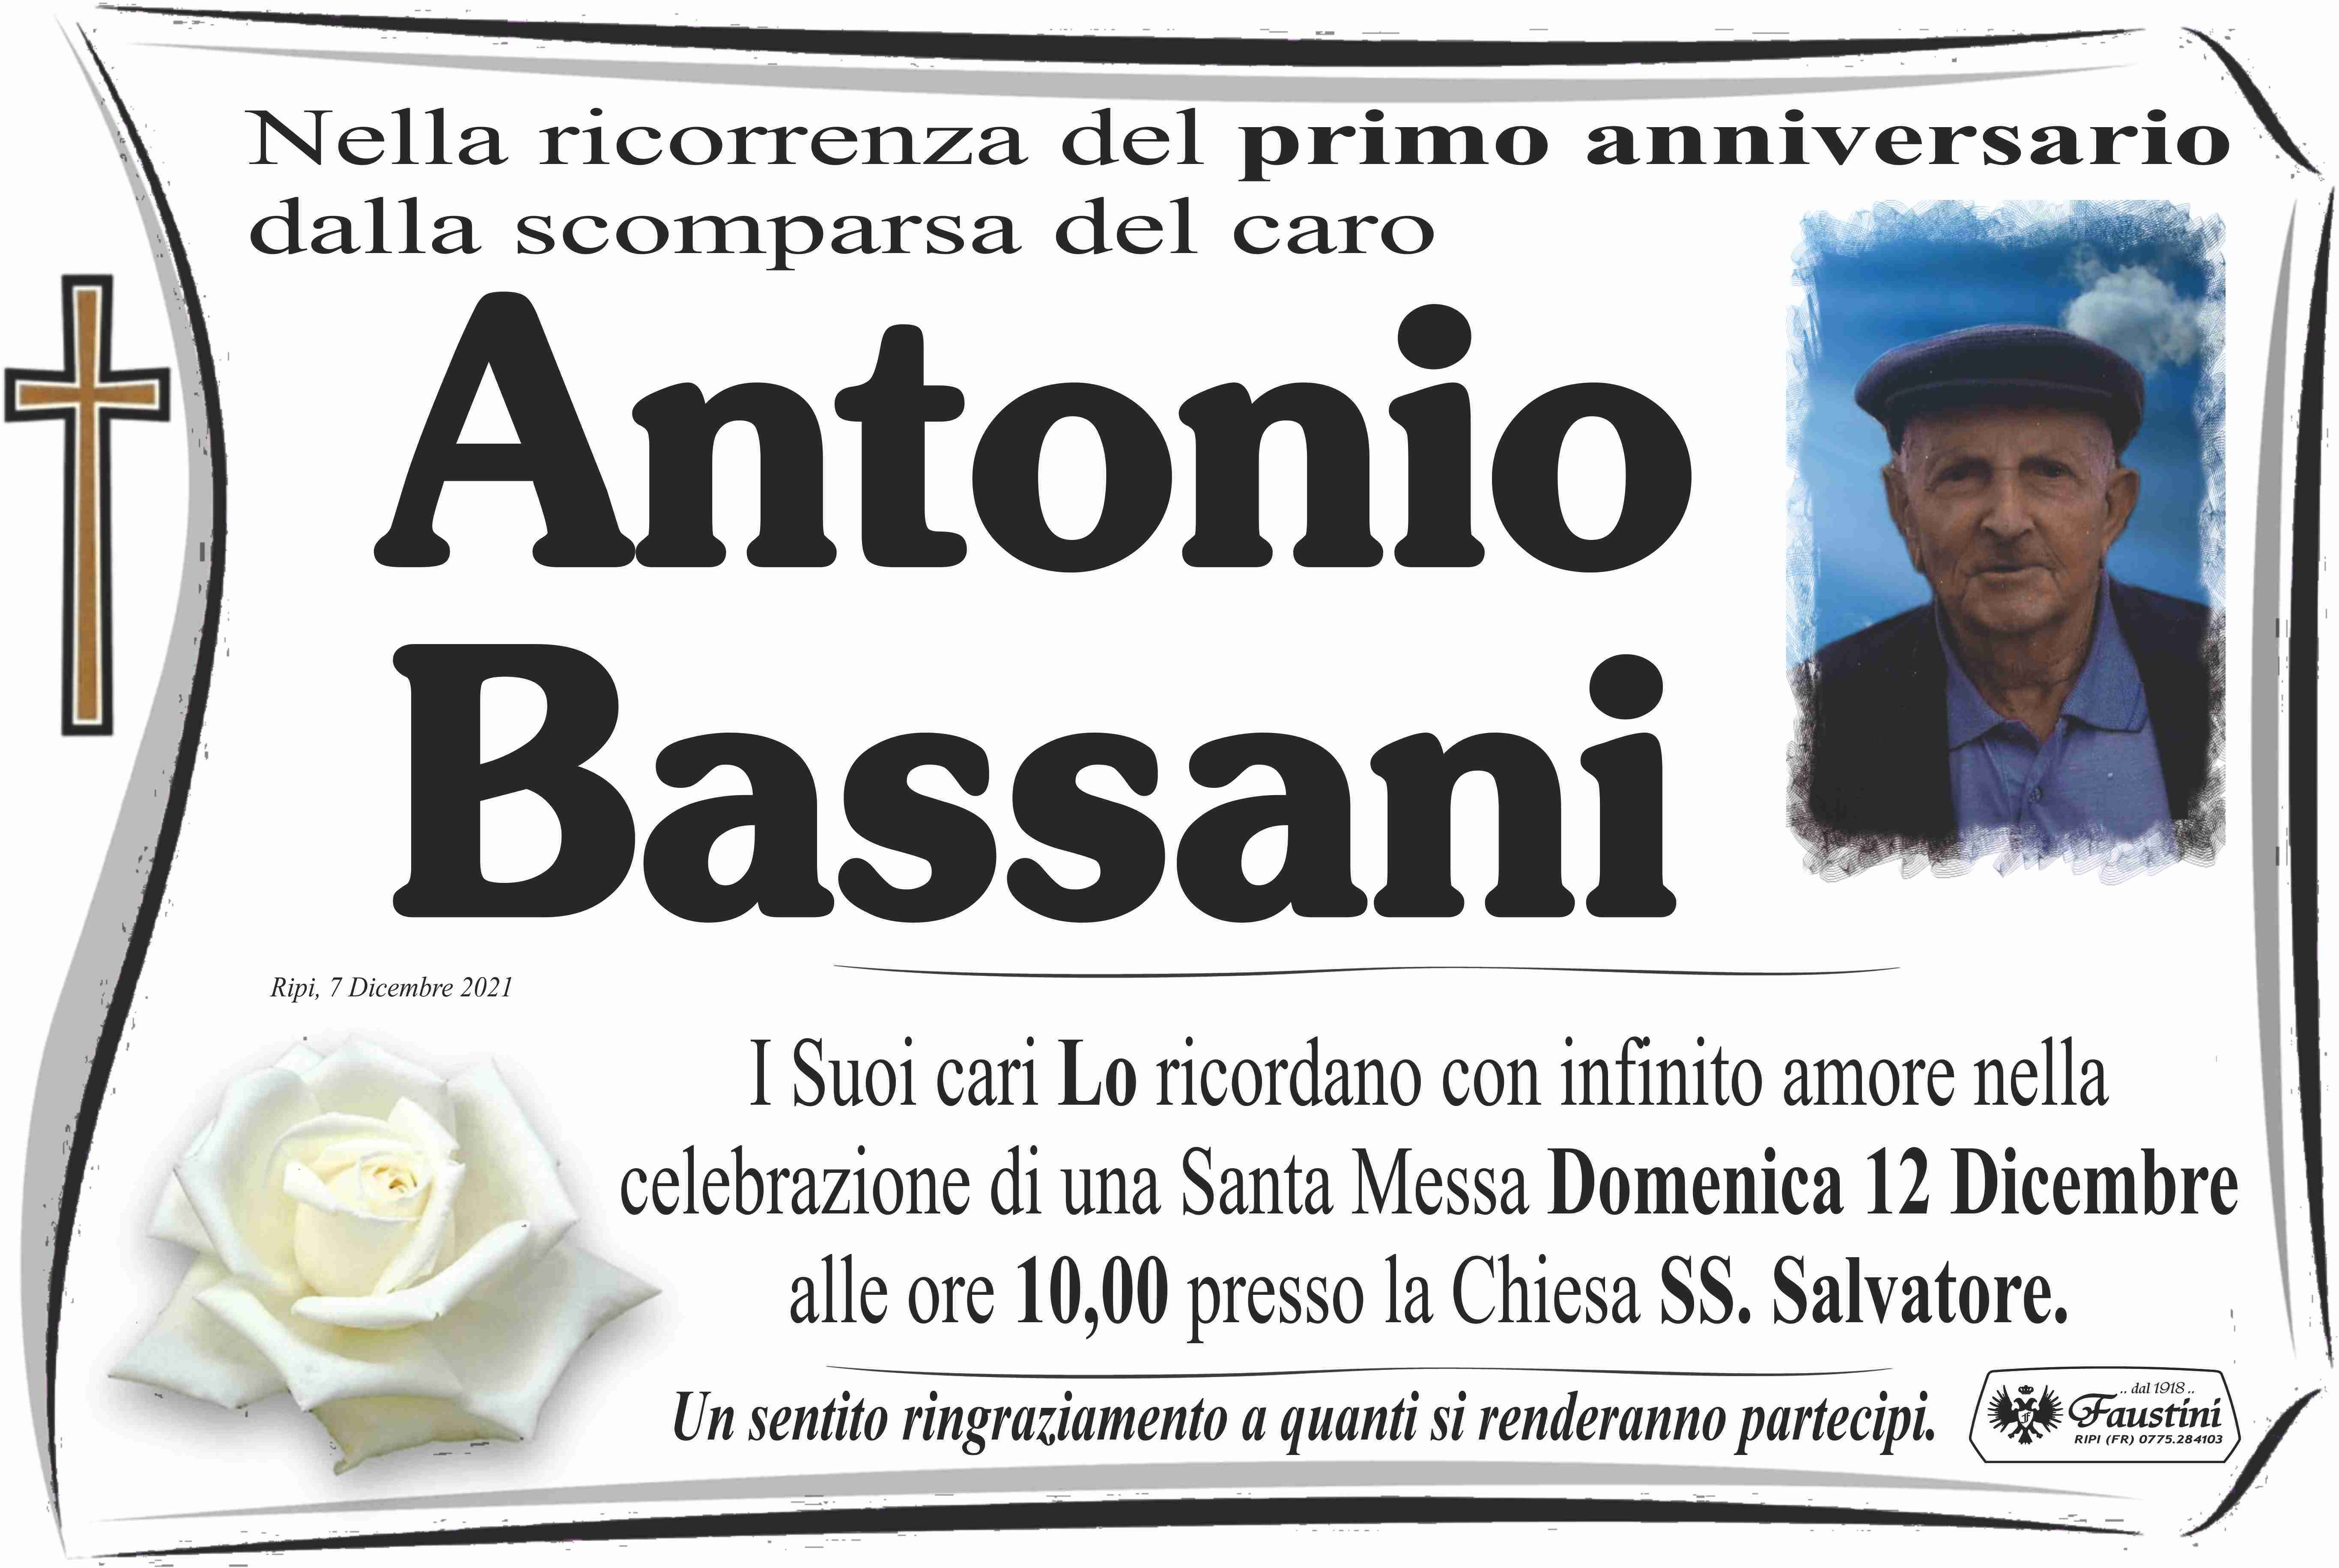 Antonio Bassani